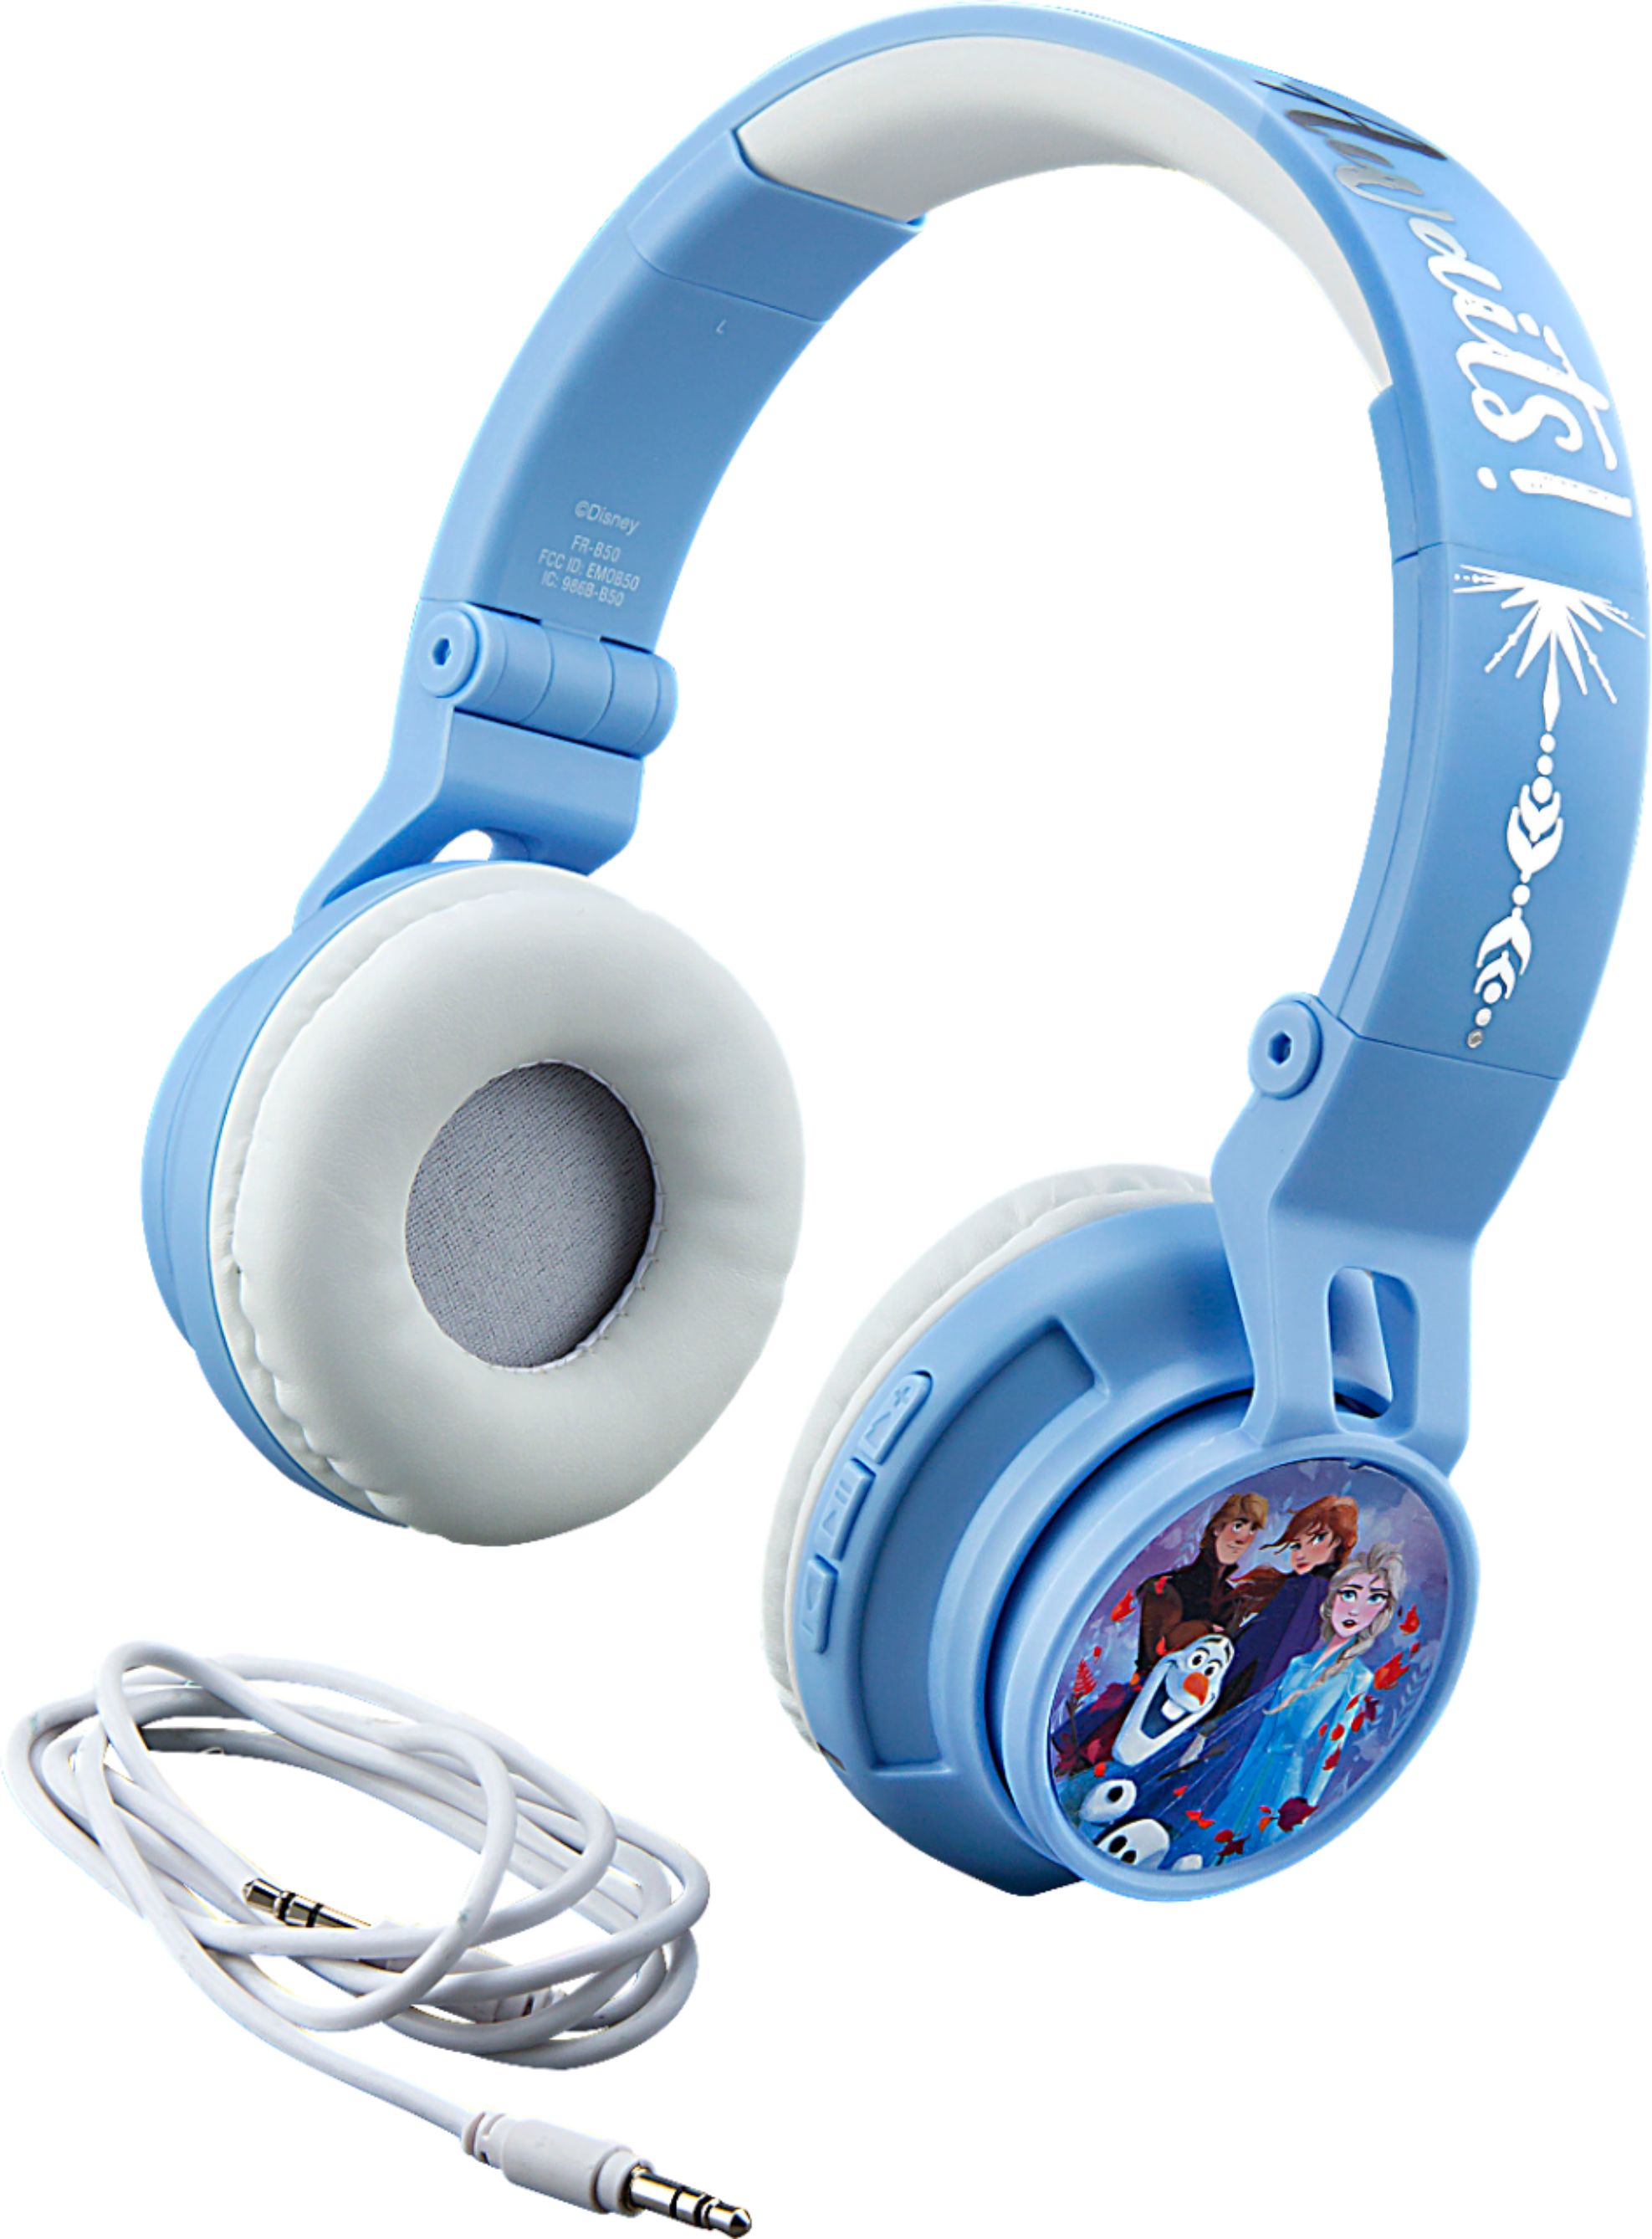 Angle View: eKids - Frozen II Bluetooth Headphones - blue